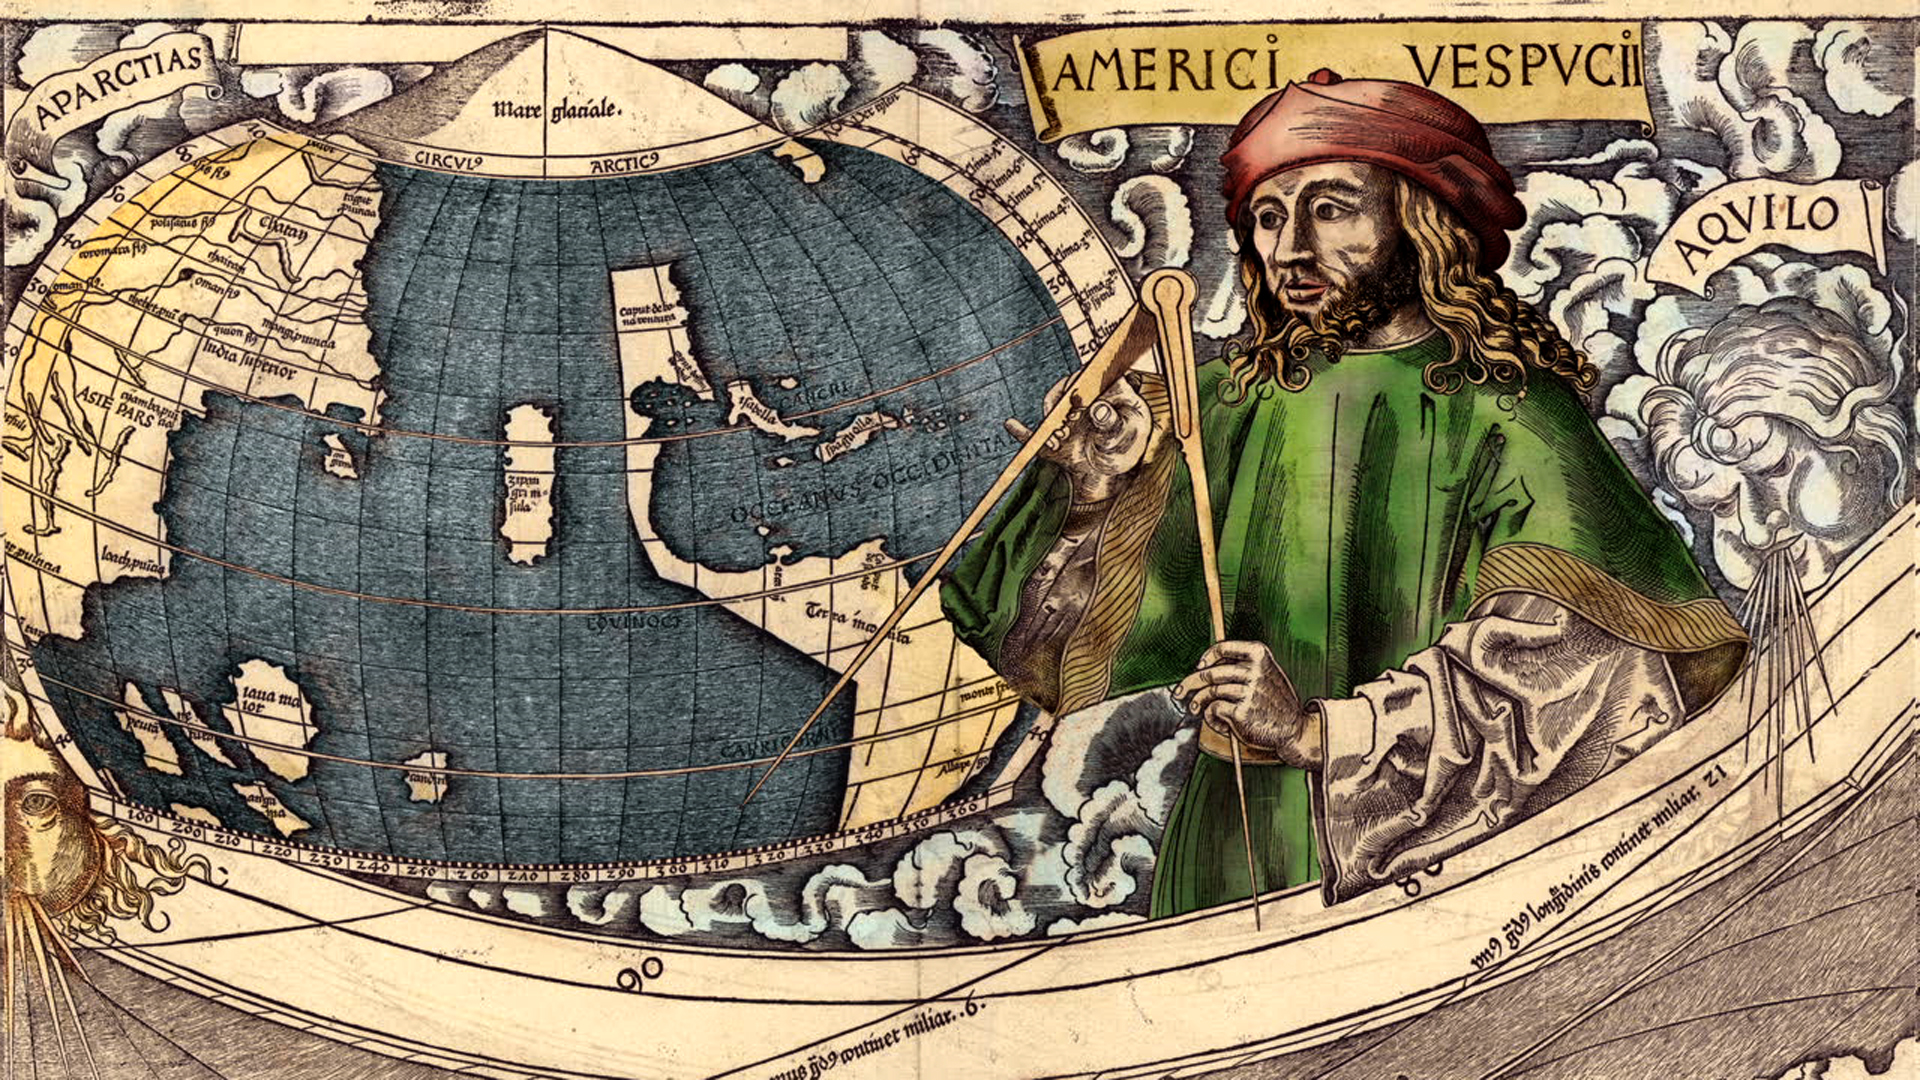 Was America discovered by Amerigo?